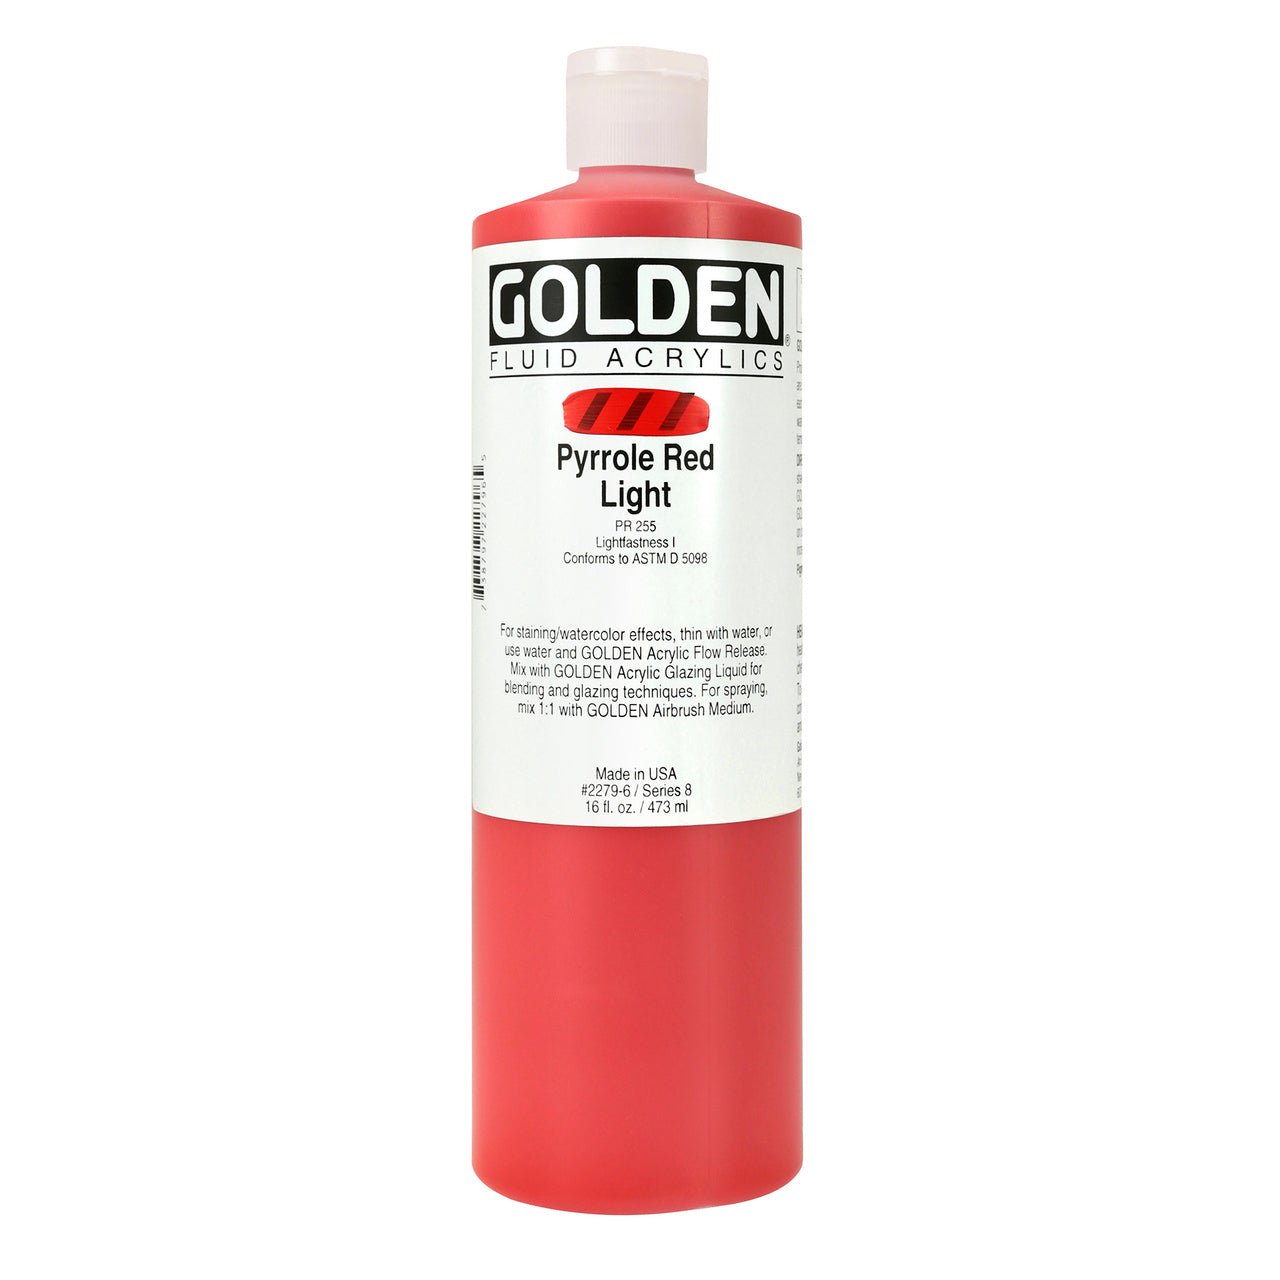 Golden Fluid Acrylic Pyrrole Red Light 16 oz - merriartist.com